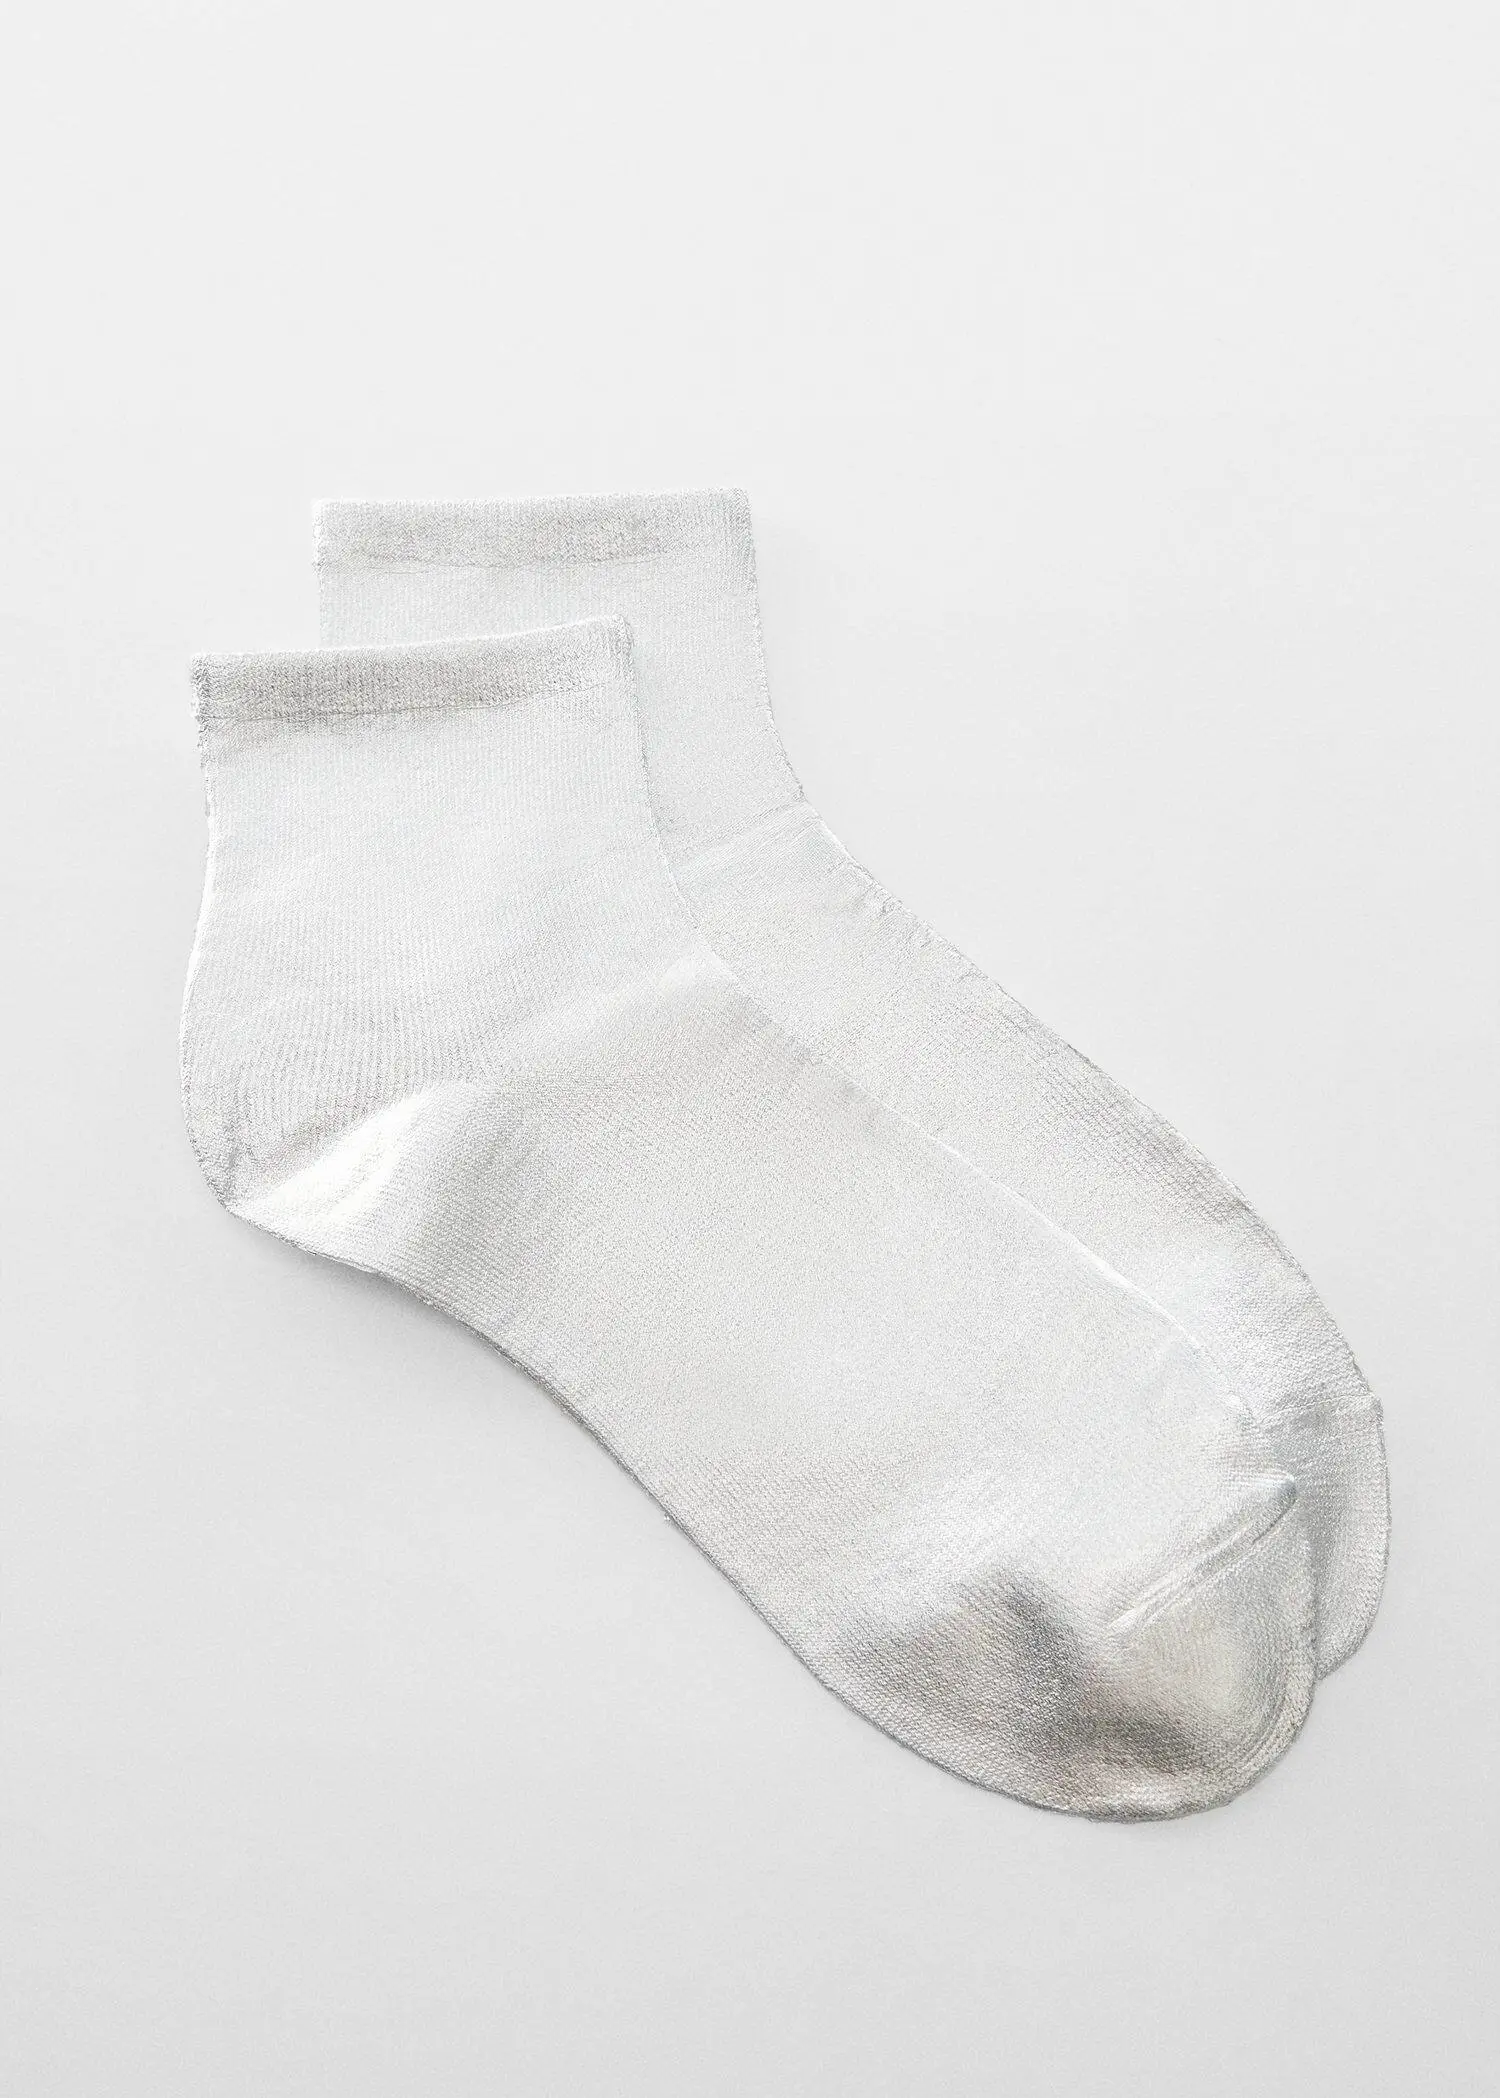 Mango Foil socks. 2